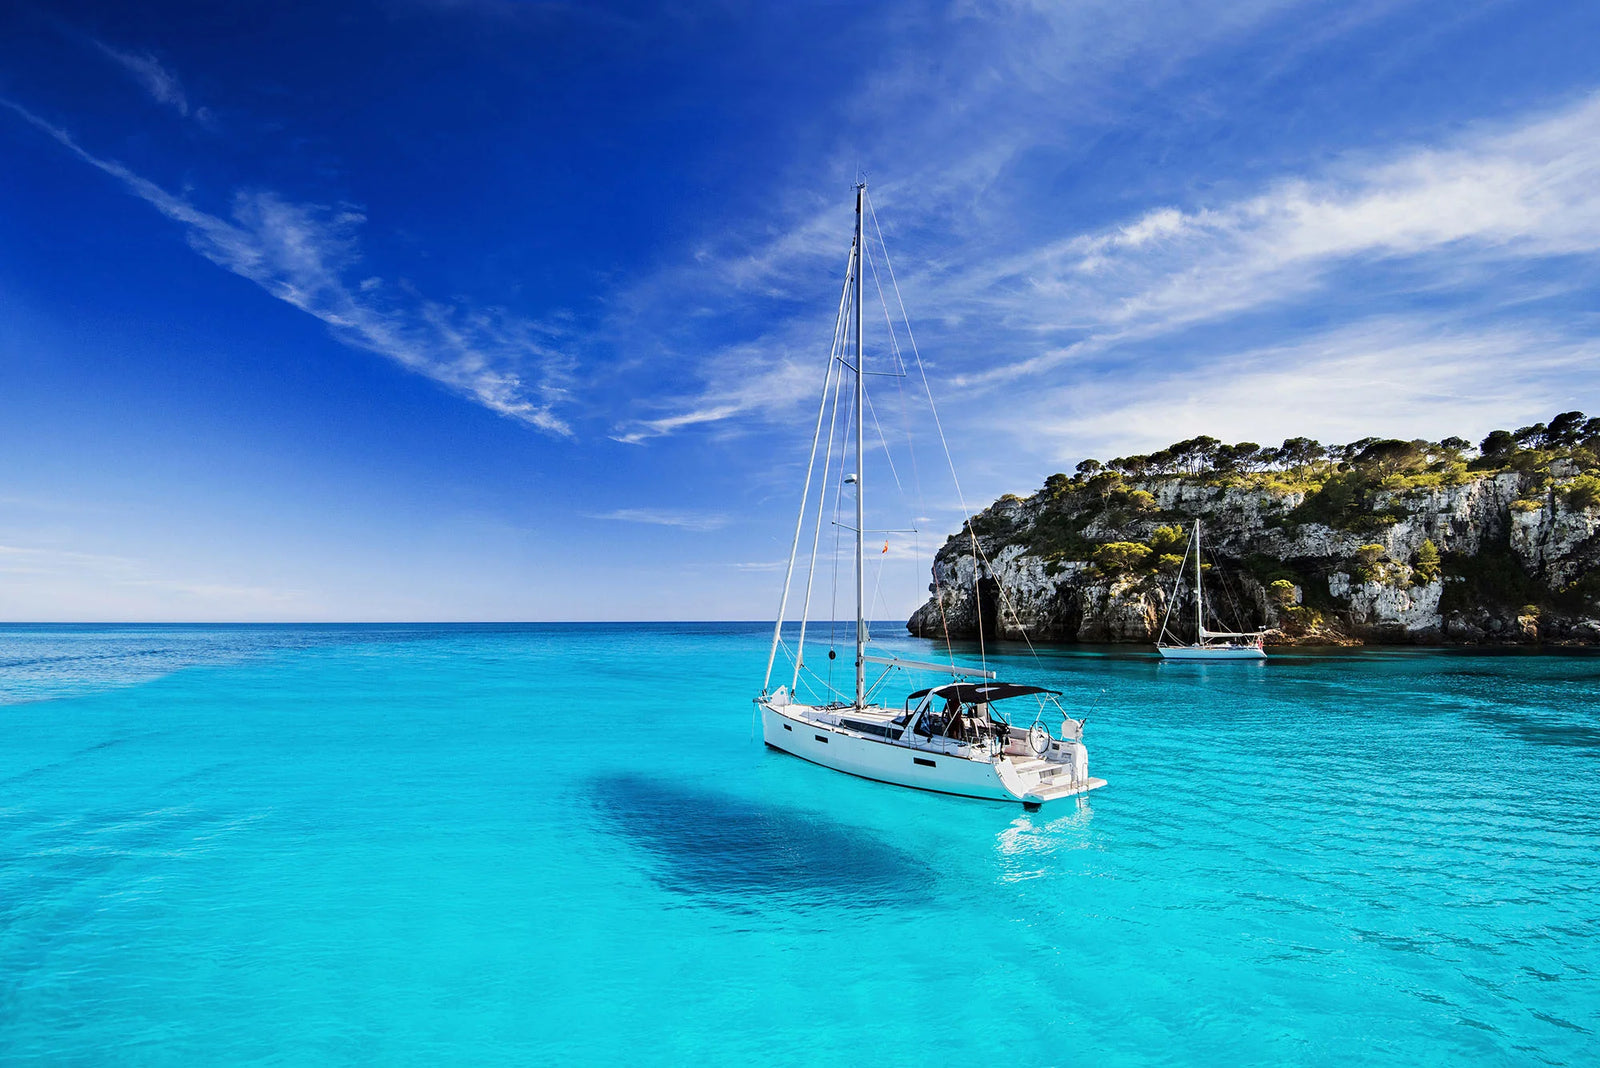 Sailboat in a bright blue bay